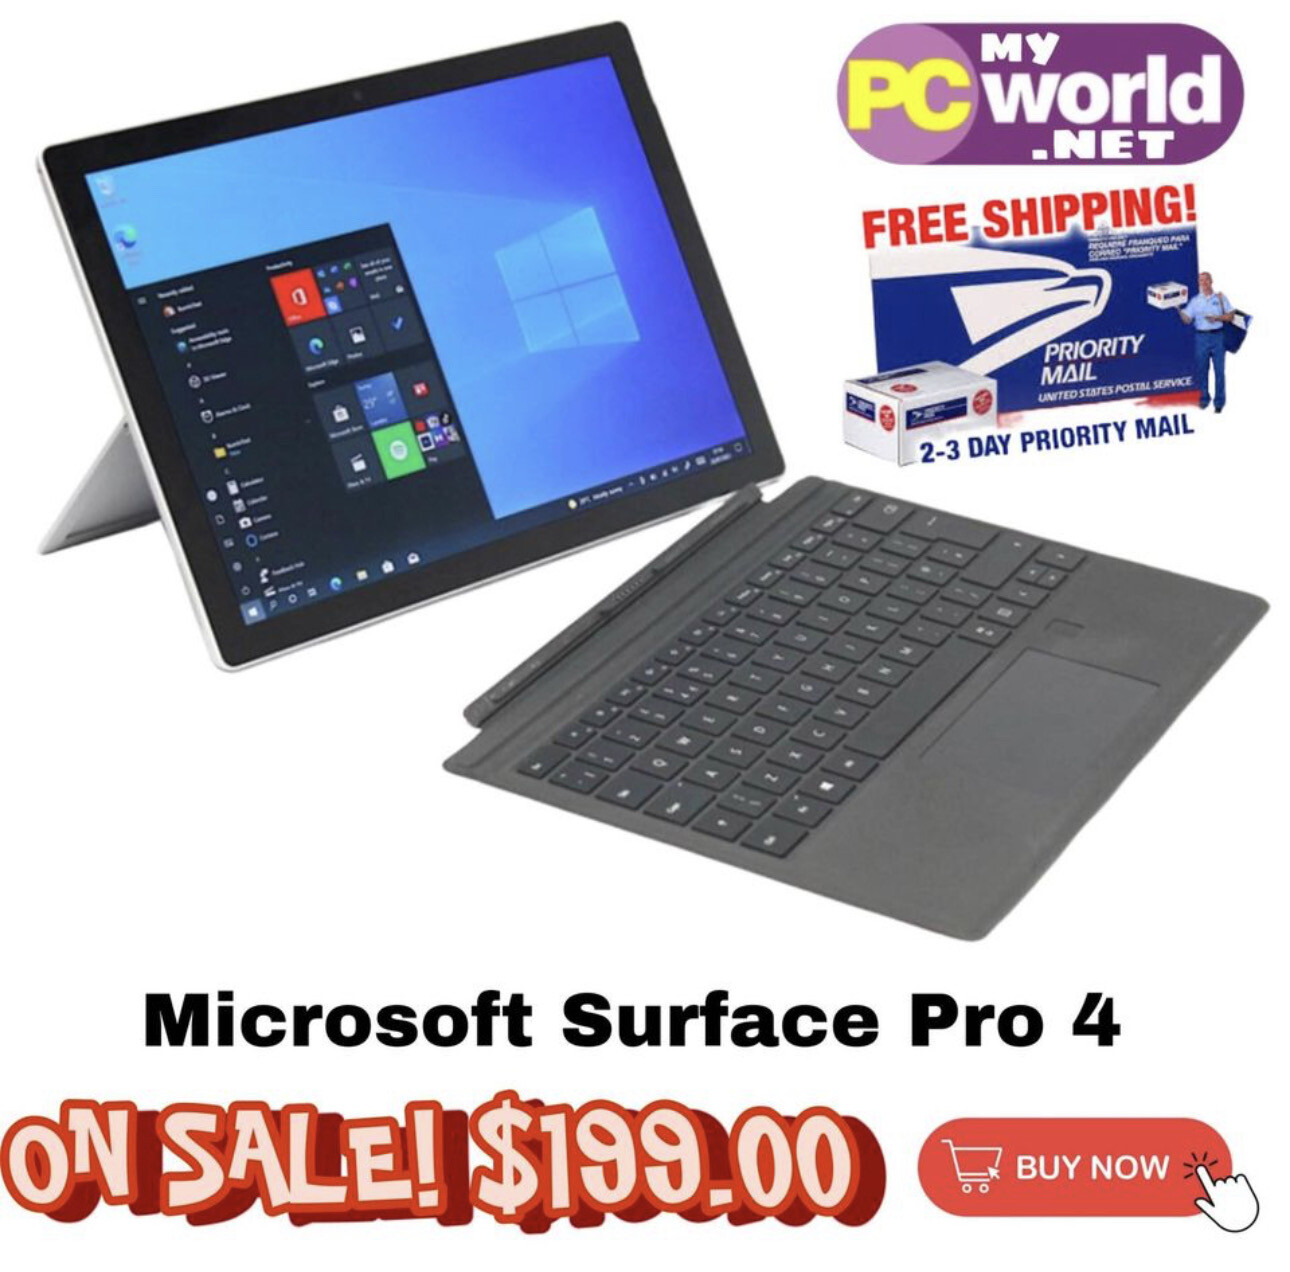 Microsoft Surface Pro 4 Intel Core i5 4GB DDR3 128GB SSD Windows 10